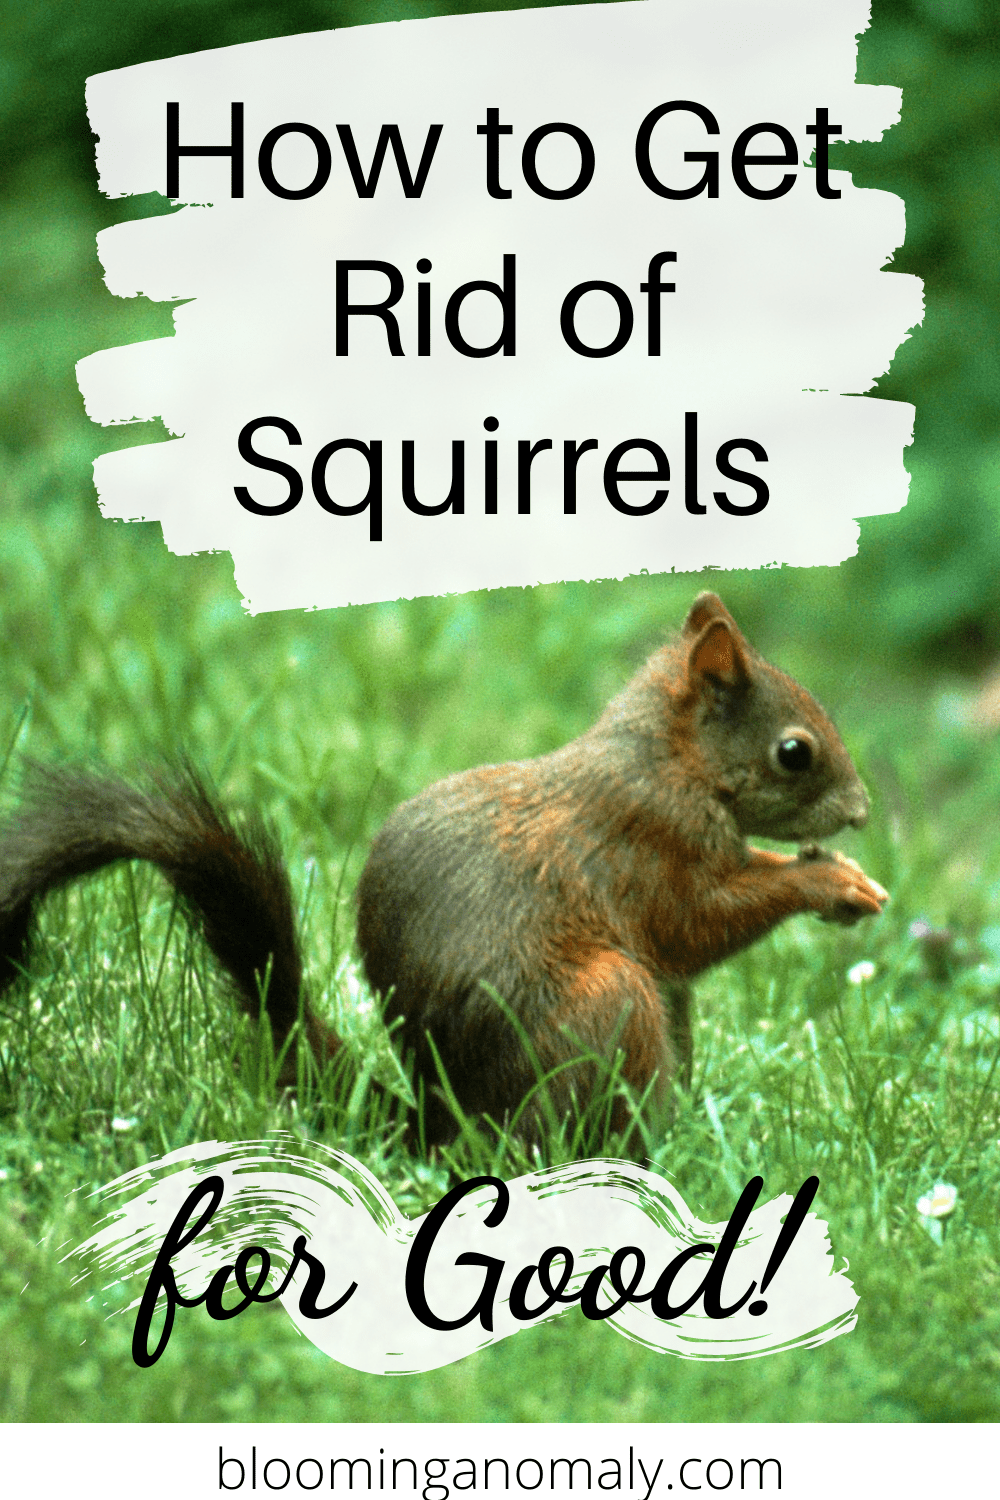 Get Rid of Squirrels